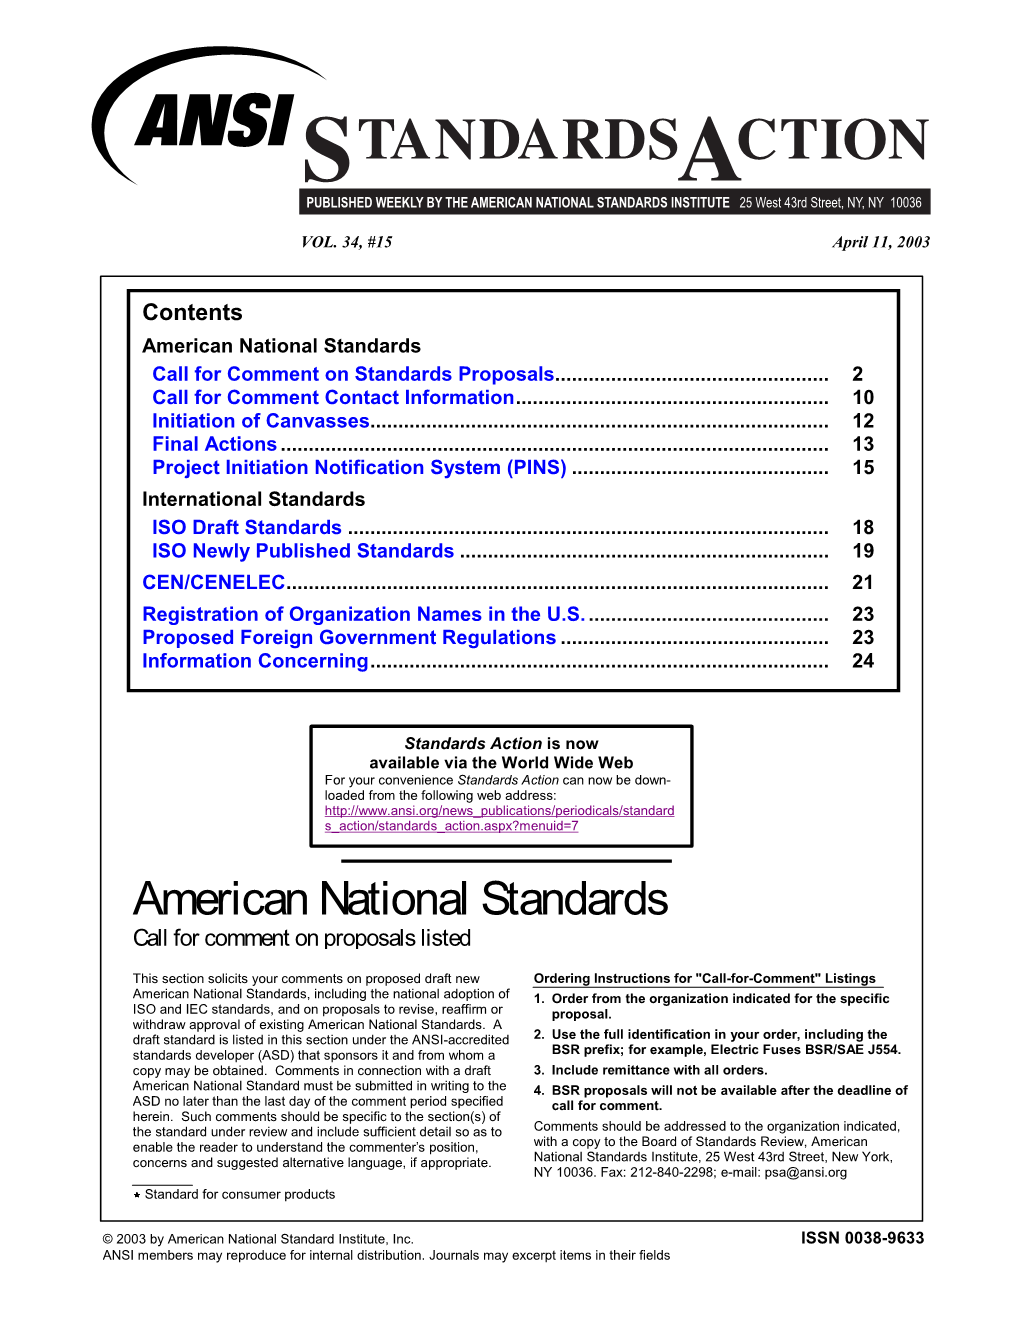 Standards Action Layout SAV3415